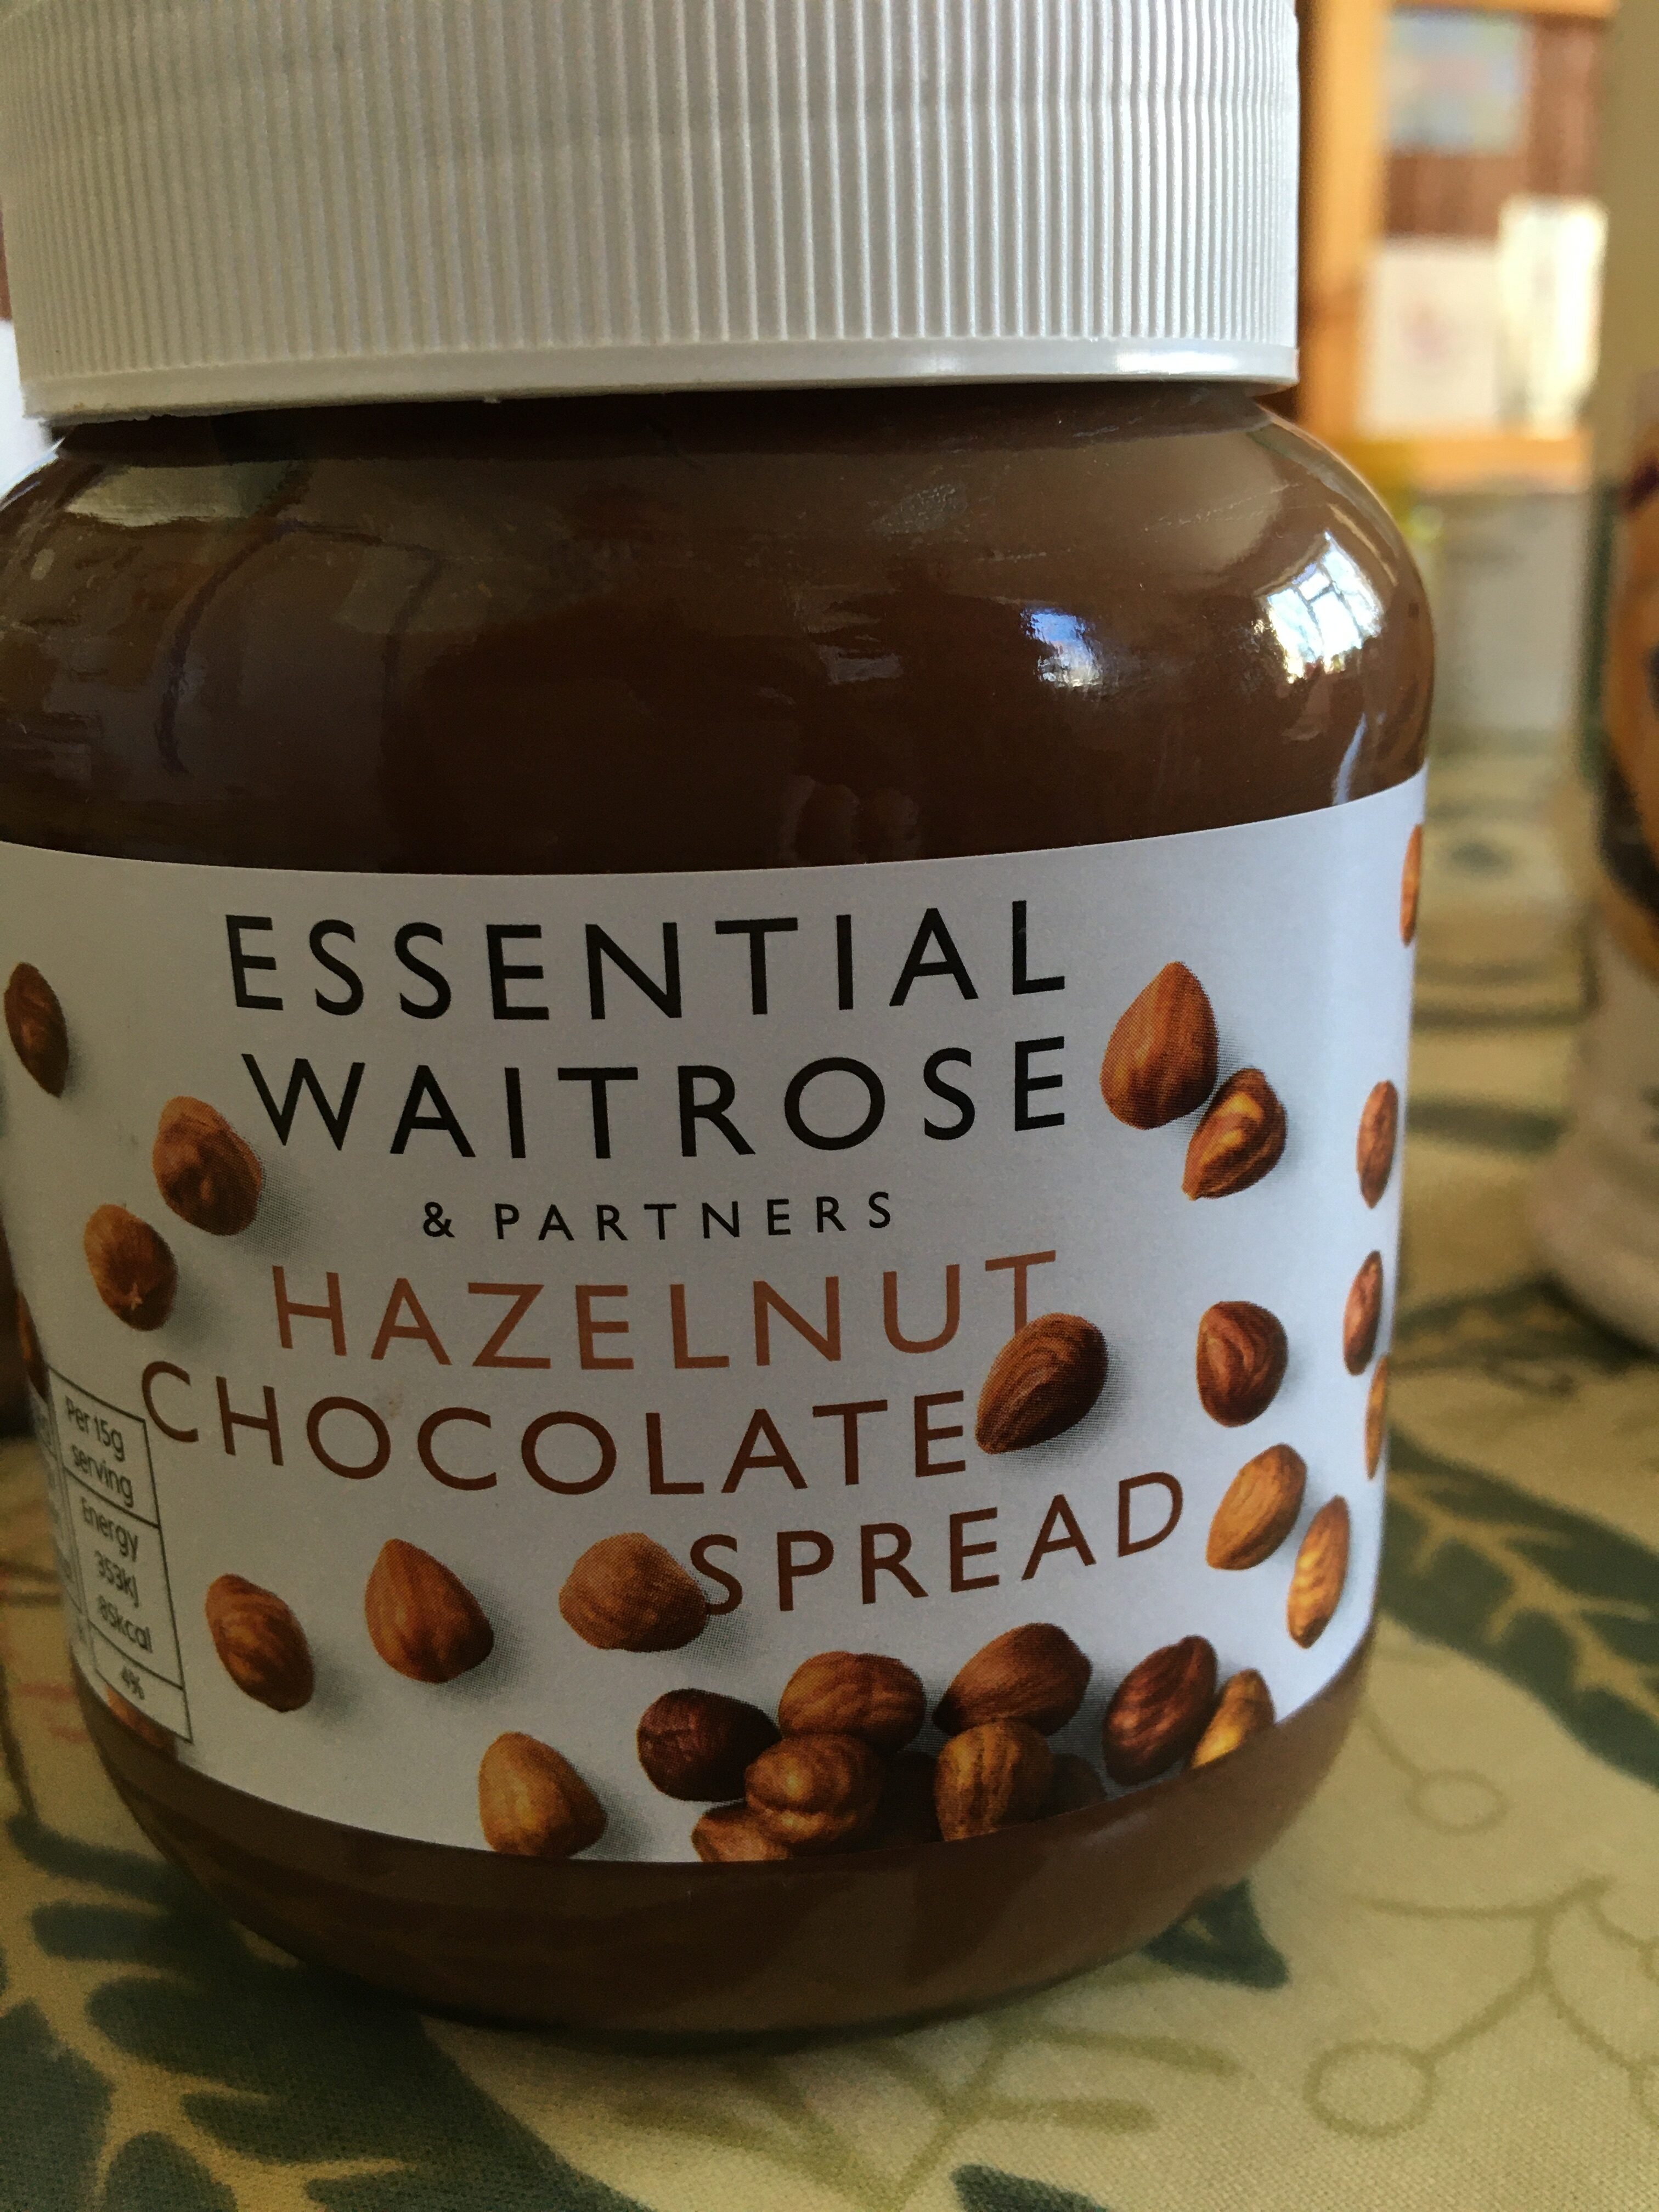 Hazelnut chocolate spread - Product - en